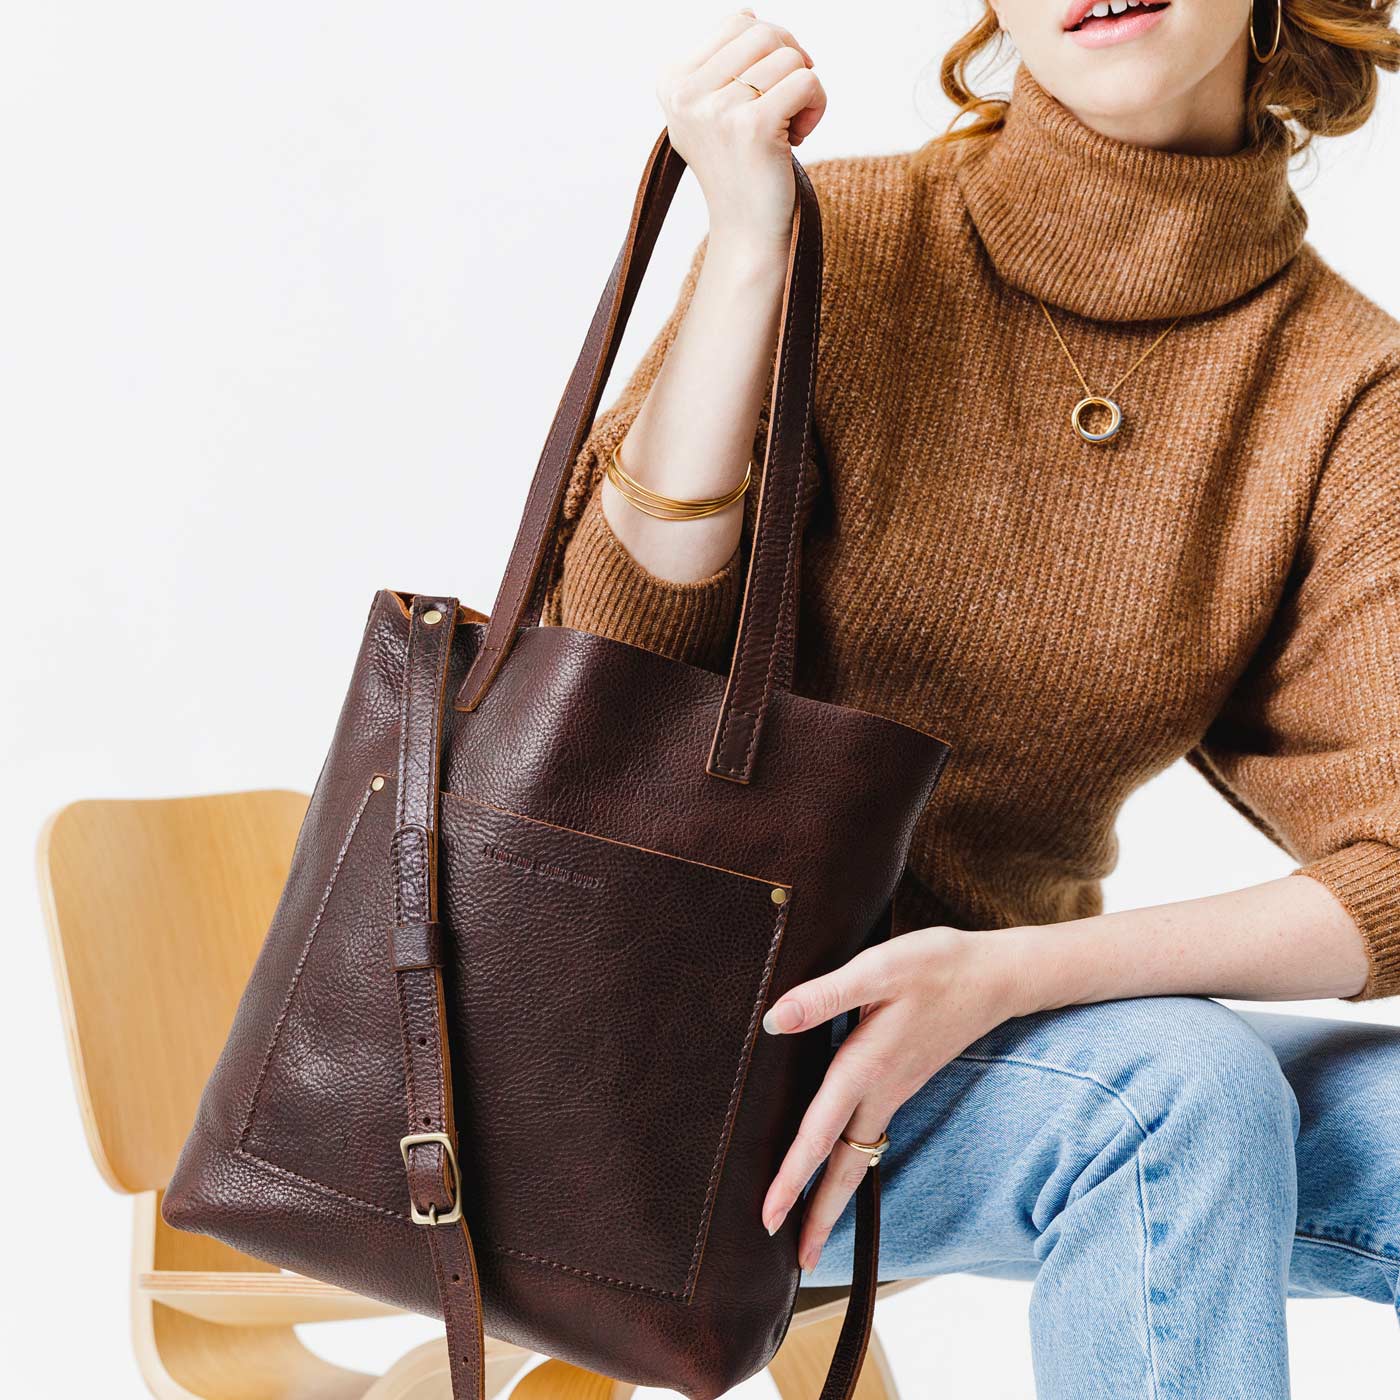 Polo Ralph Lauren Brown Mini Suede Tote Handbag - $165 tag price